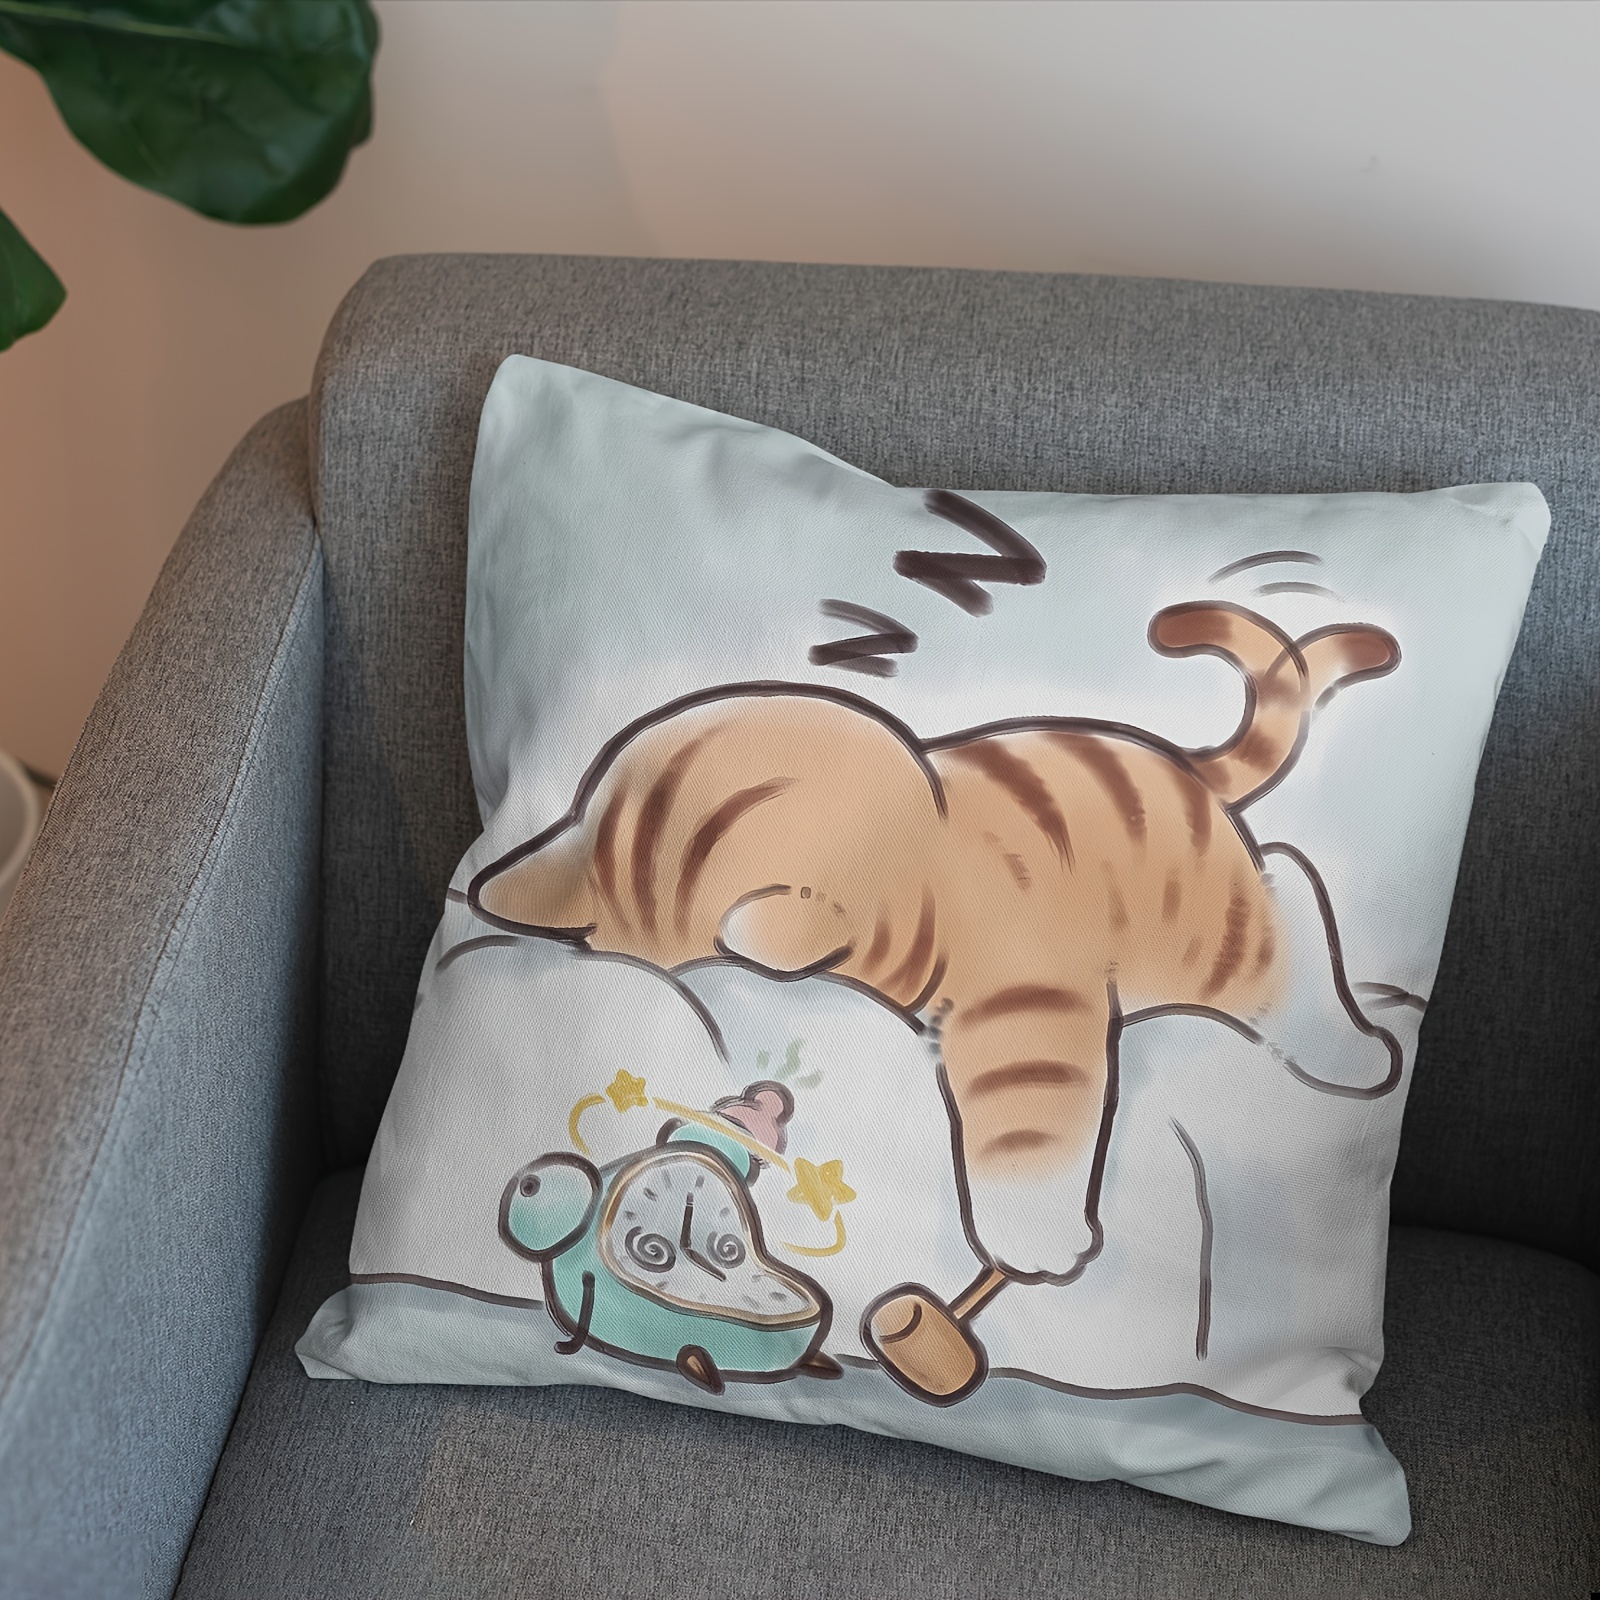 

Cute Cartoon Cat Plush Throw Pillow Cover, 18x18 Inches - Soft Microfiber, Zip Closure, Machine Washable For Sofa & Bedroom Decor